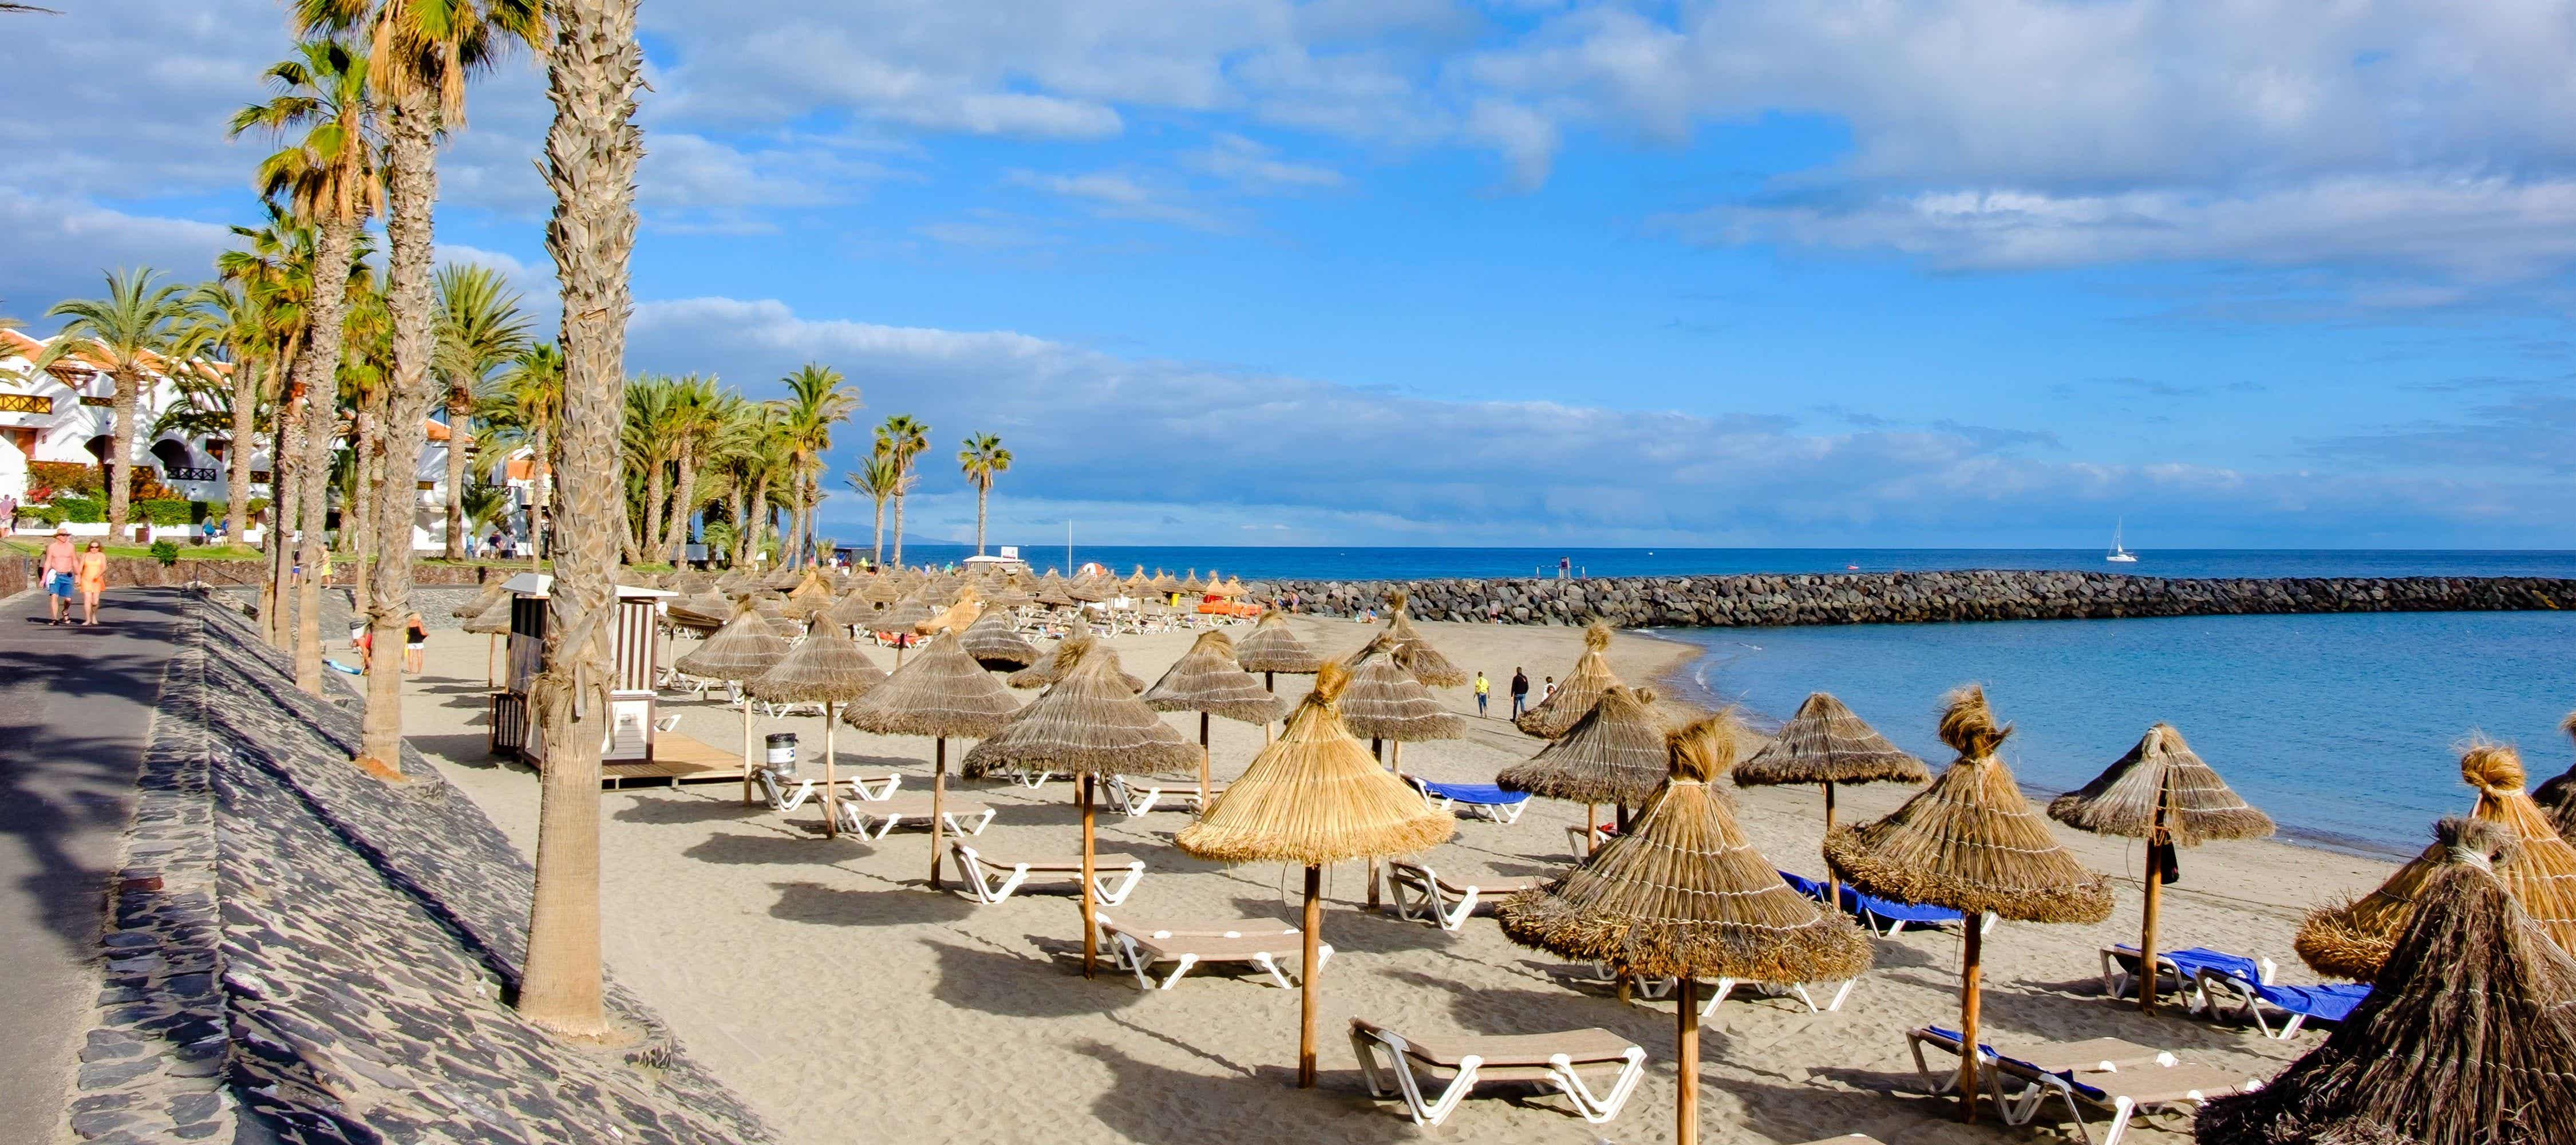 Landmand Stolt Perfekt Playa de las Americas holidays 2023/2024 from £270 | loveholidays